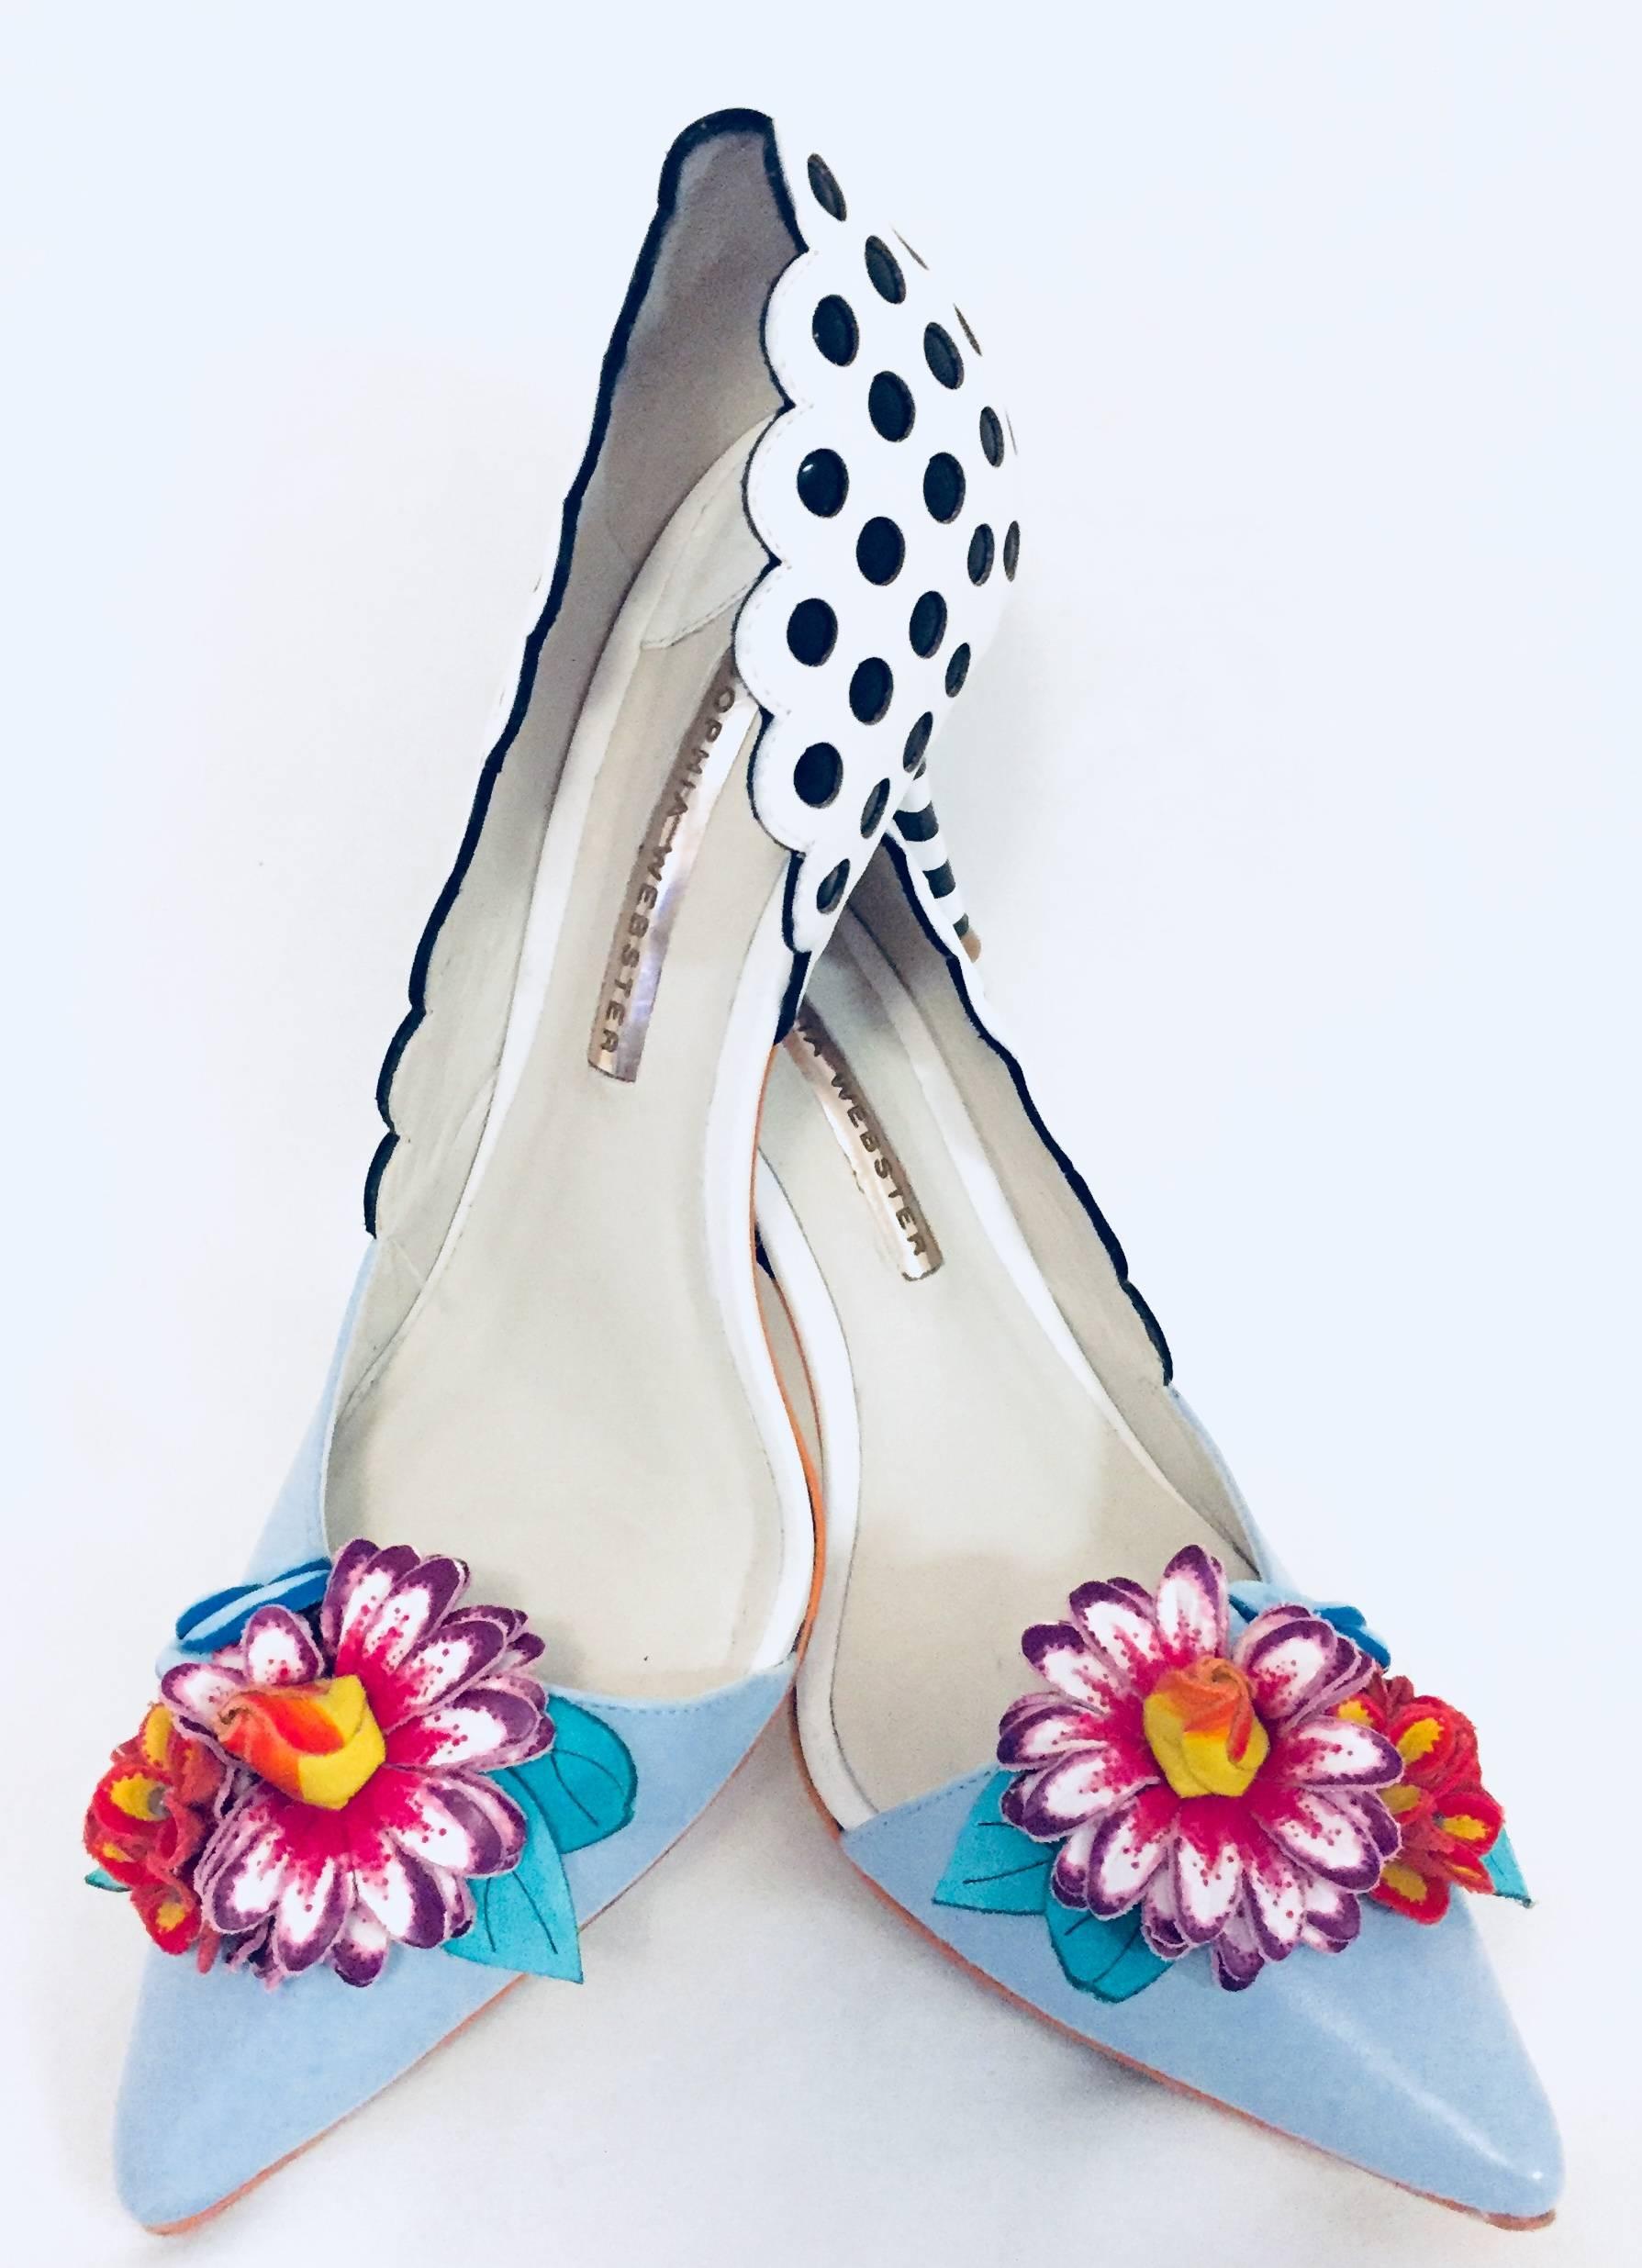 Sensational Sophia Black & White Polka Dots Dorsay Pumps w/ Embellished Flowers 3